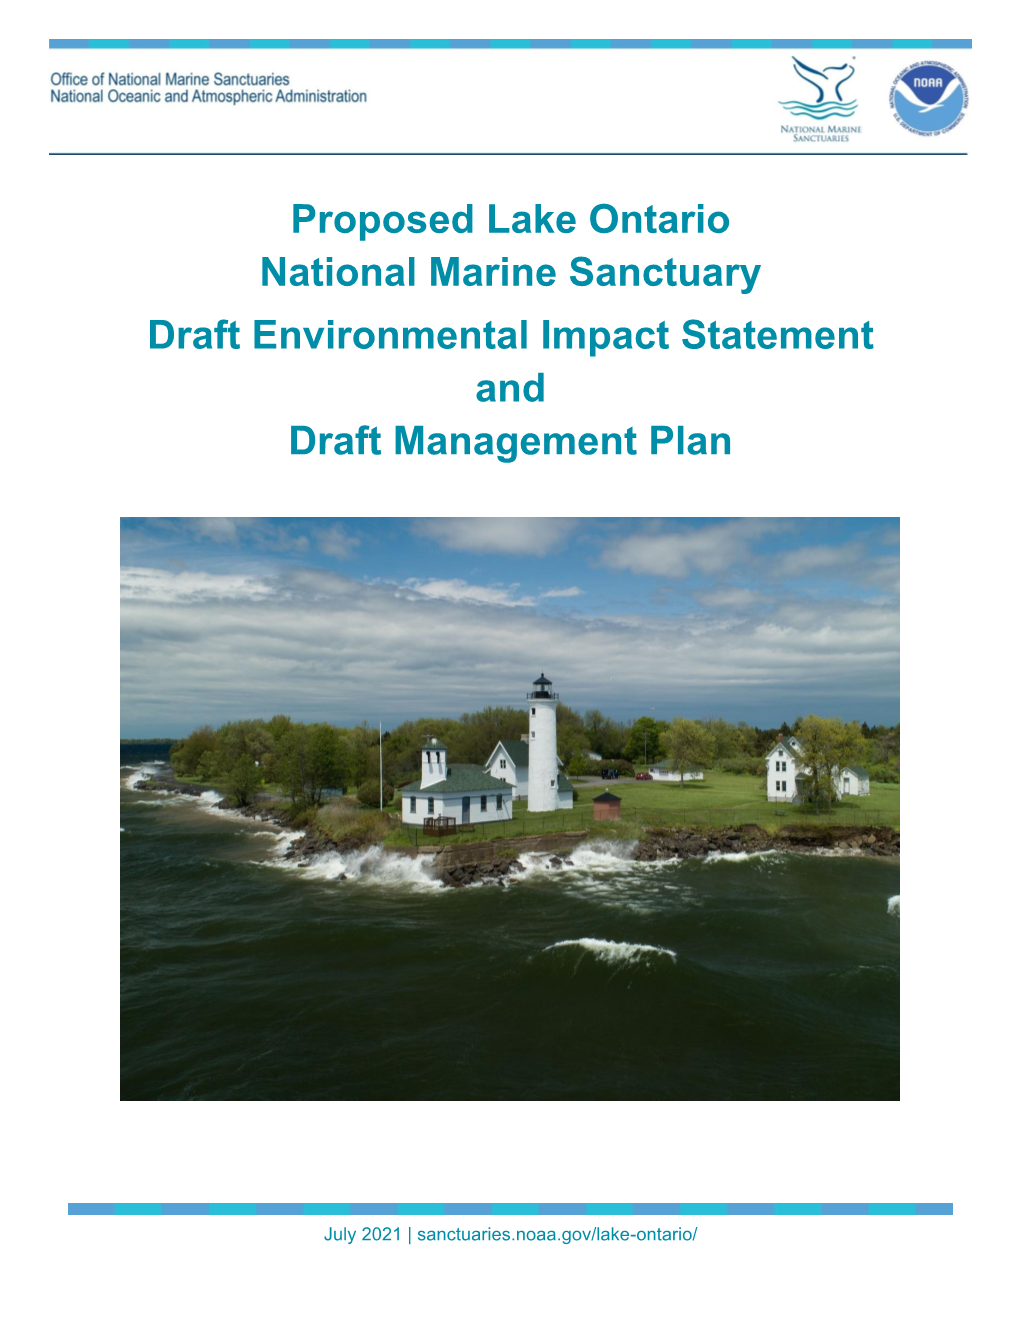 Proposed Lake Ontario National Marine Sanctuary Draft Environmental Impact Statement and Draft Management Plan